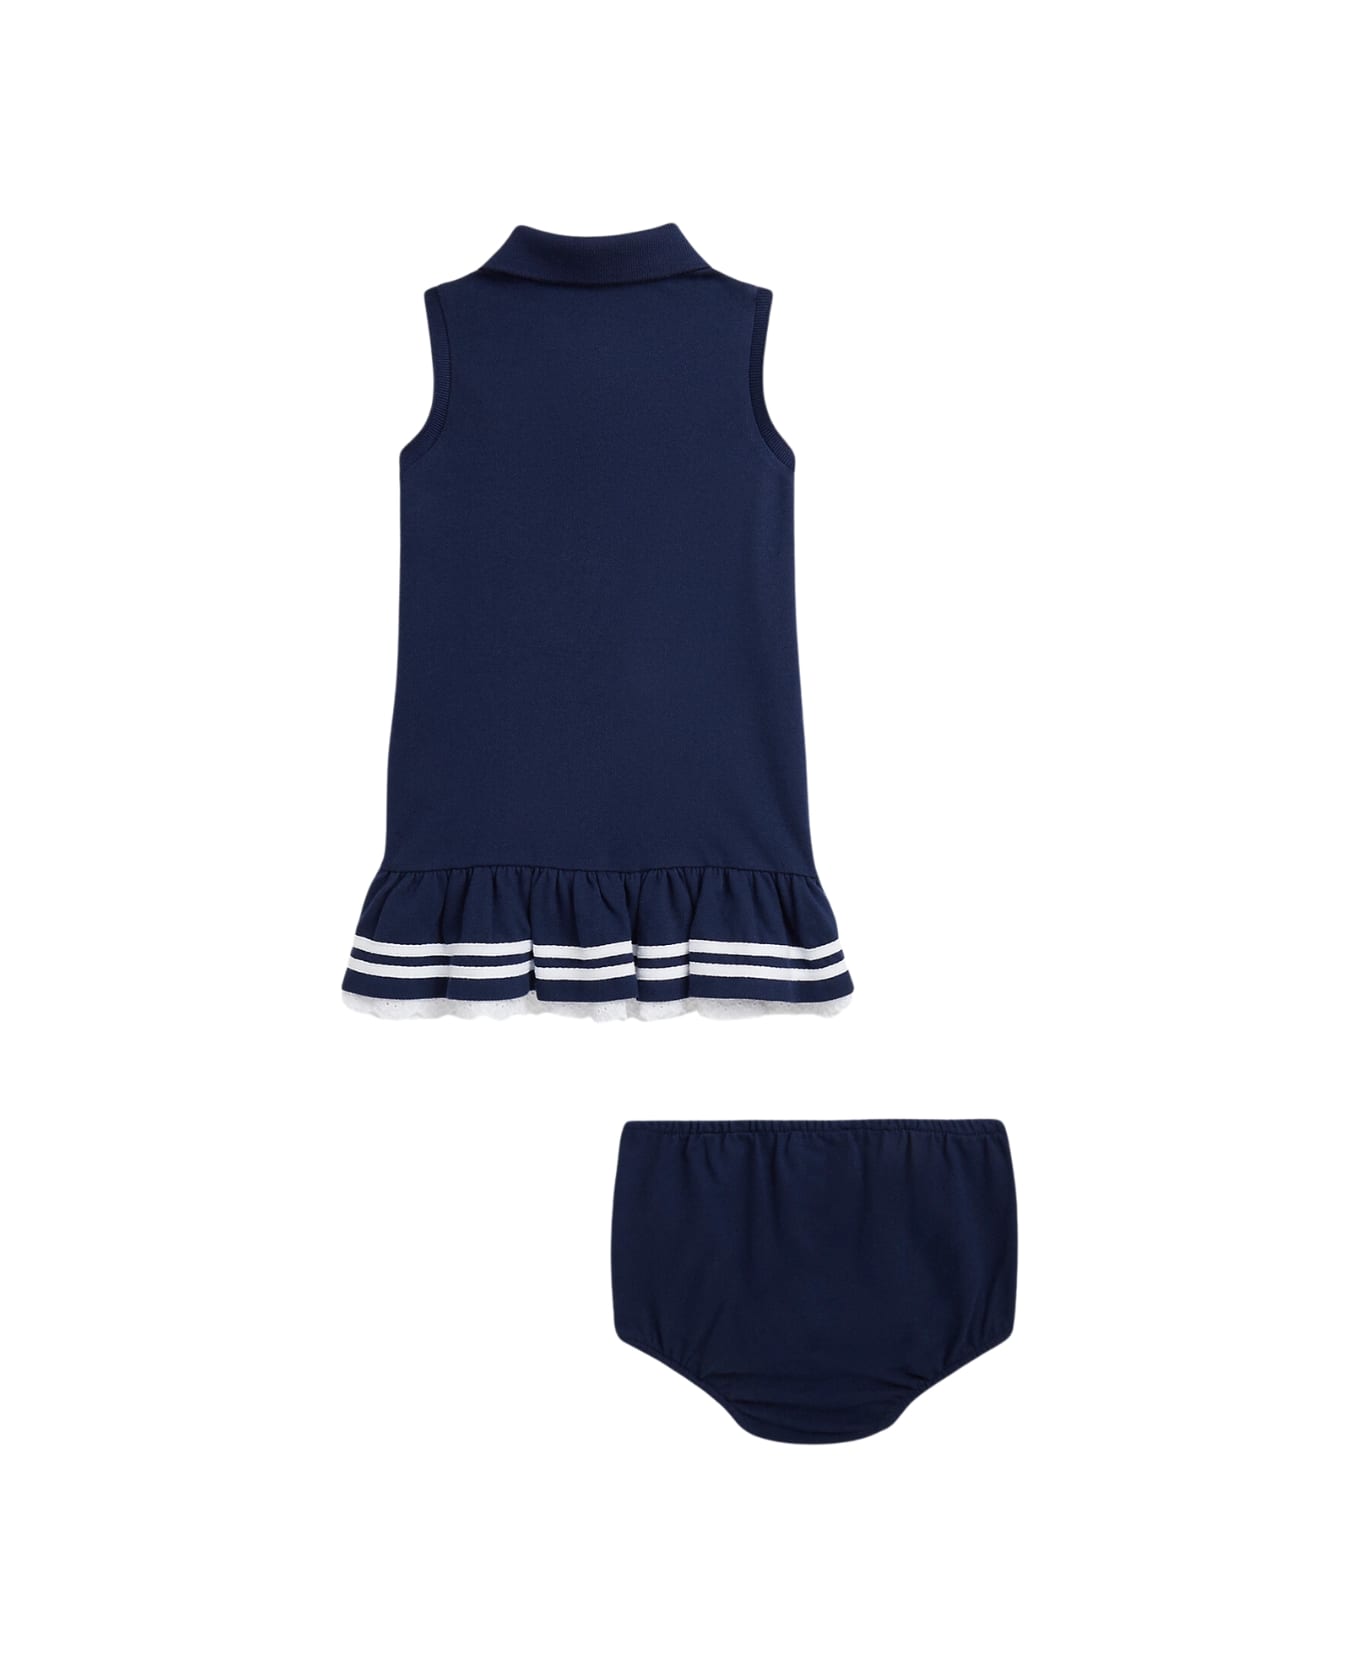 Polo Ralph Lauren Polosailor Dresses Day Dress - Refined Navy